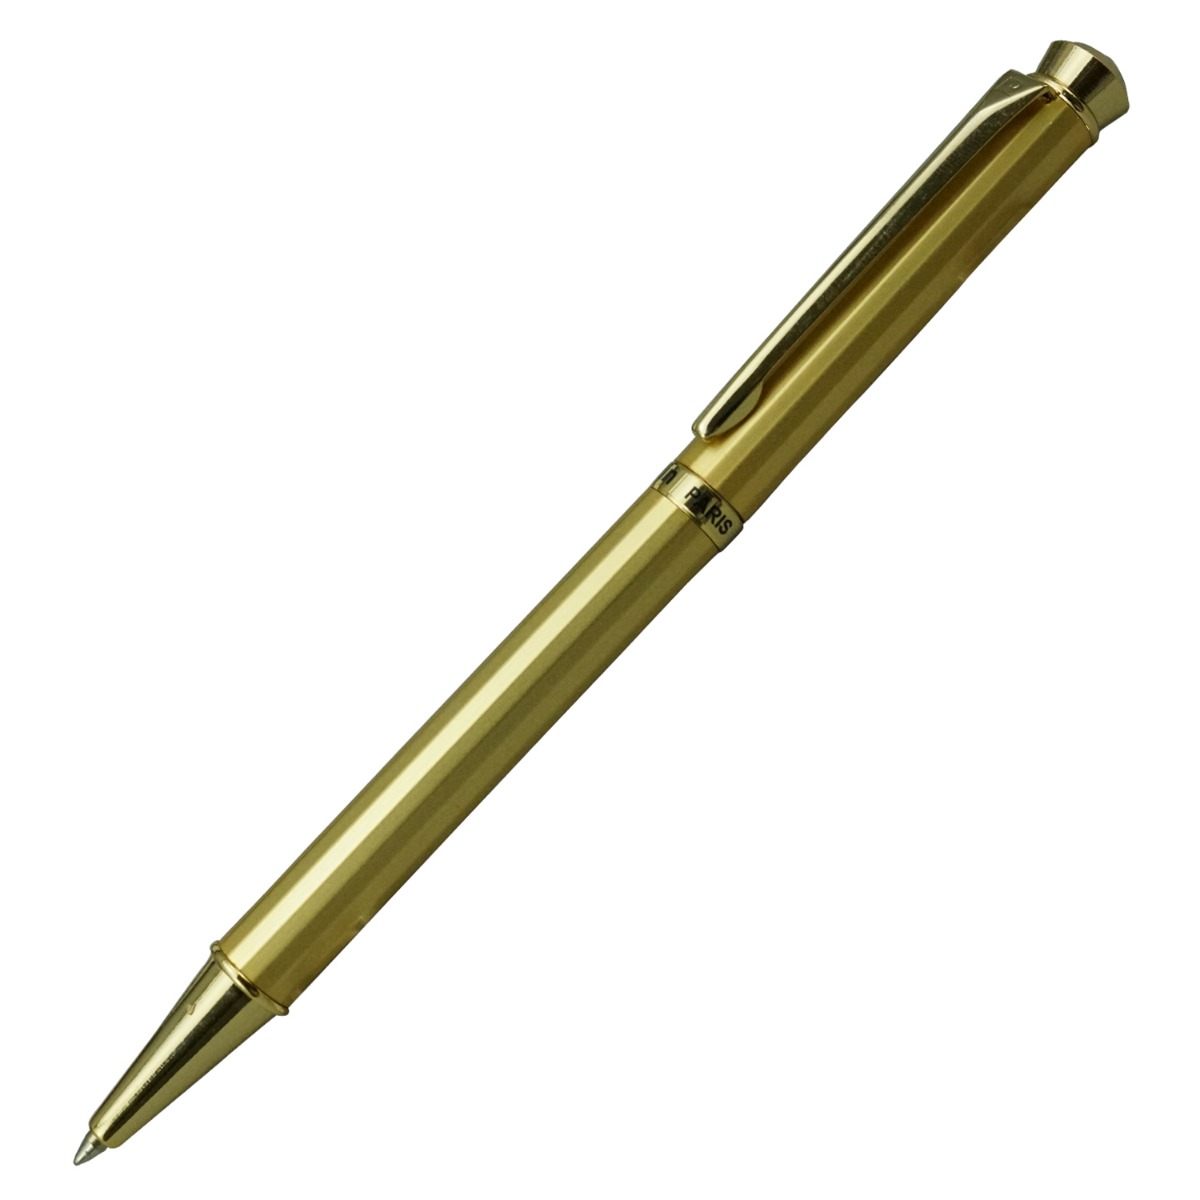 Pierre Cardin  Elite Model:16236 Slim Type  Full Gold Color Body With Stone On Top Twist Type Fine Tip Ball Pen